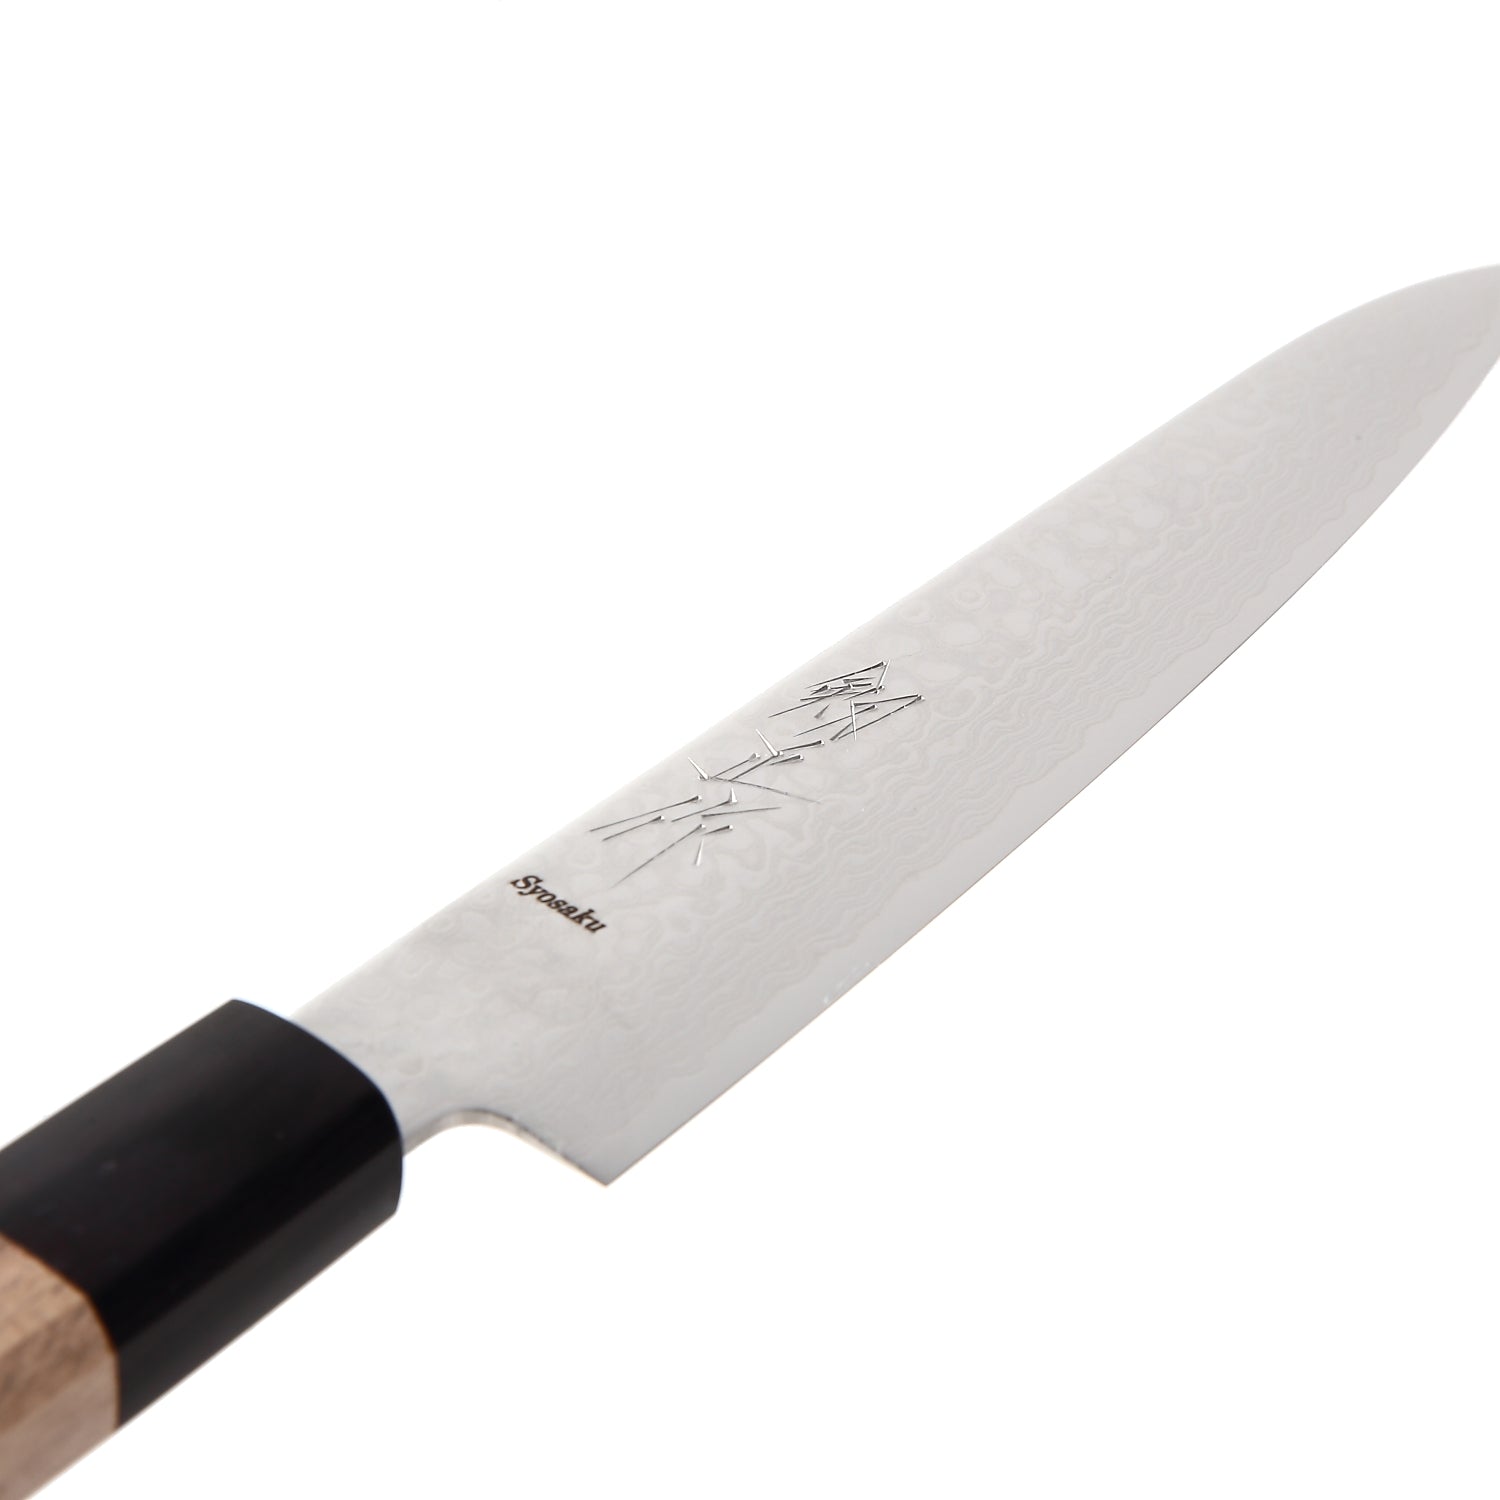 Chef knife 6 Pairing knife Damascus Kitchen Utility Sharp Handmade Knife  Sheath